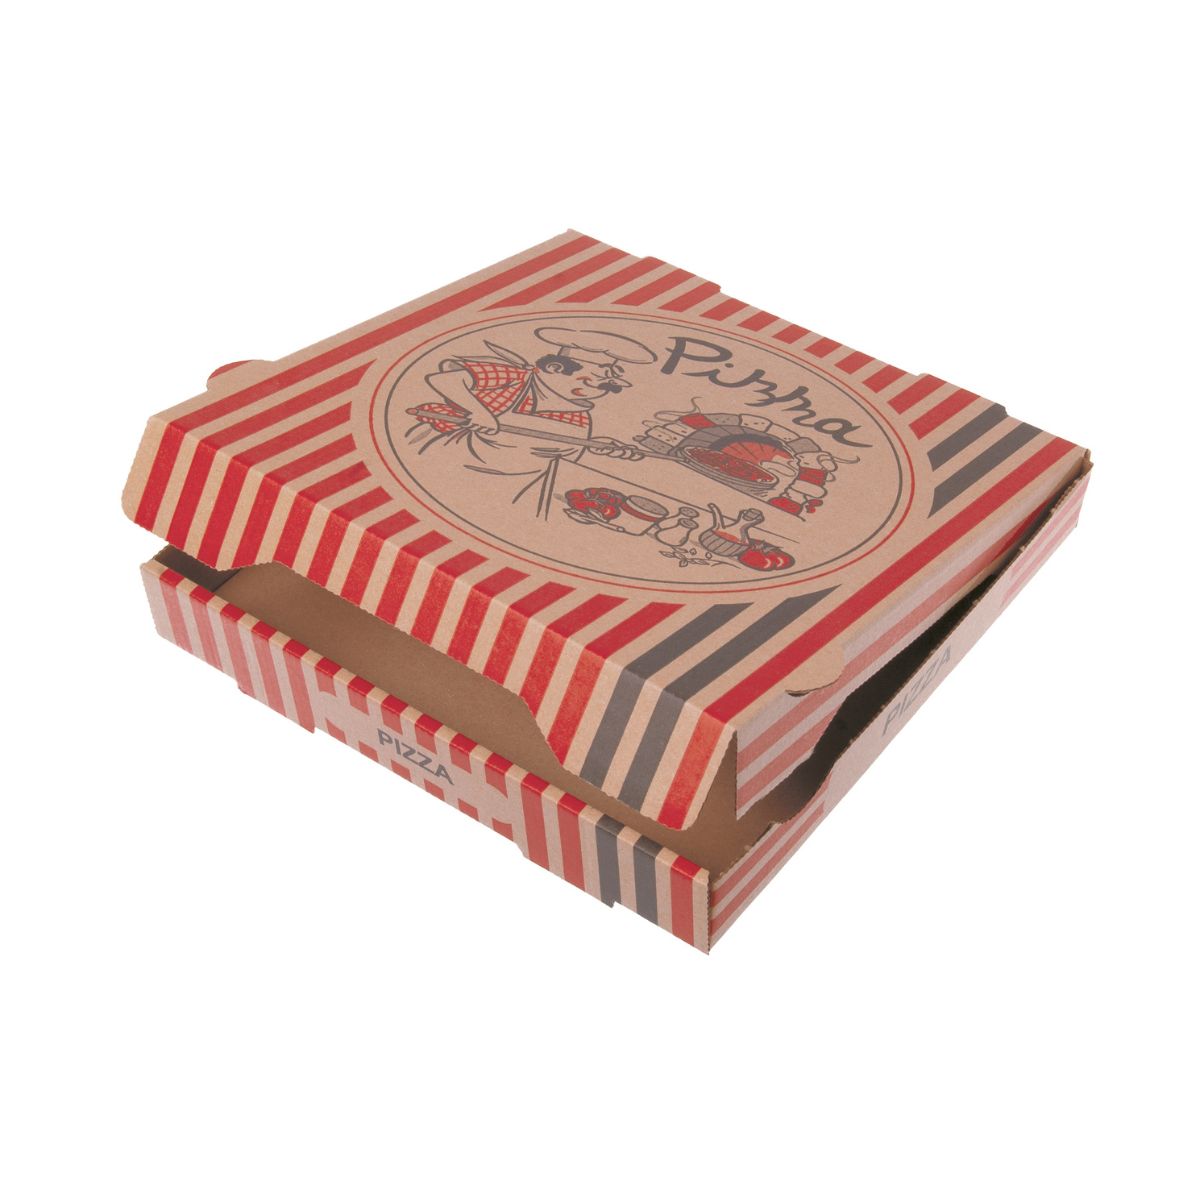 Pizzabox 32x32x4cm | Kraft rot-braun